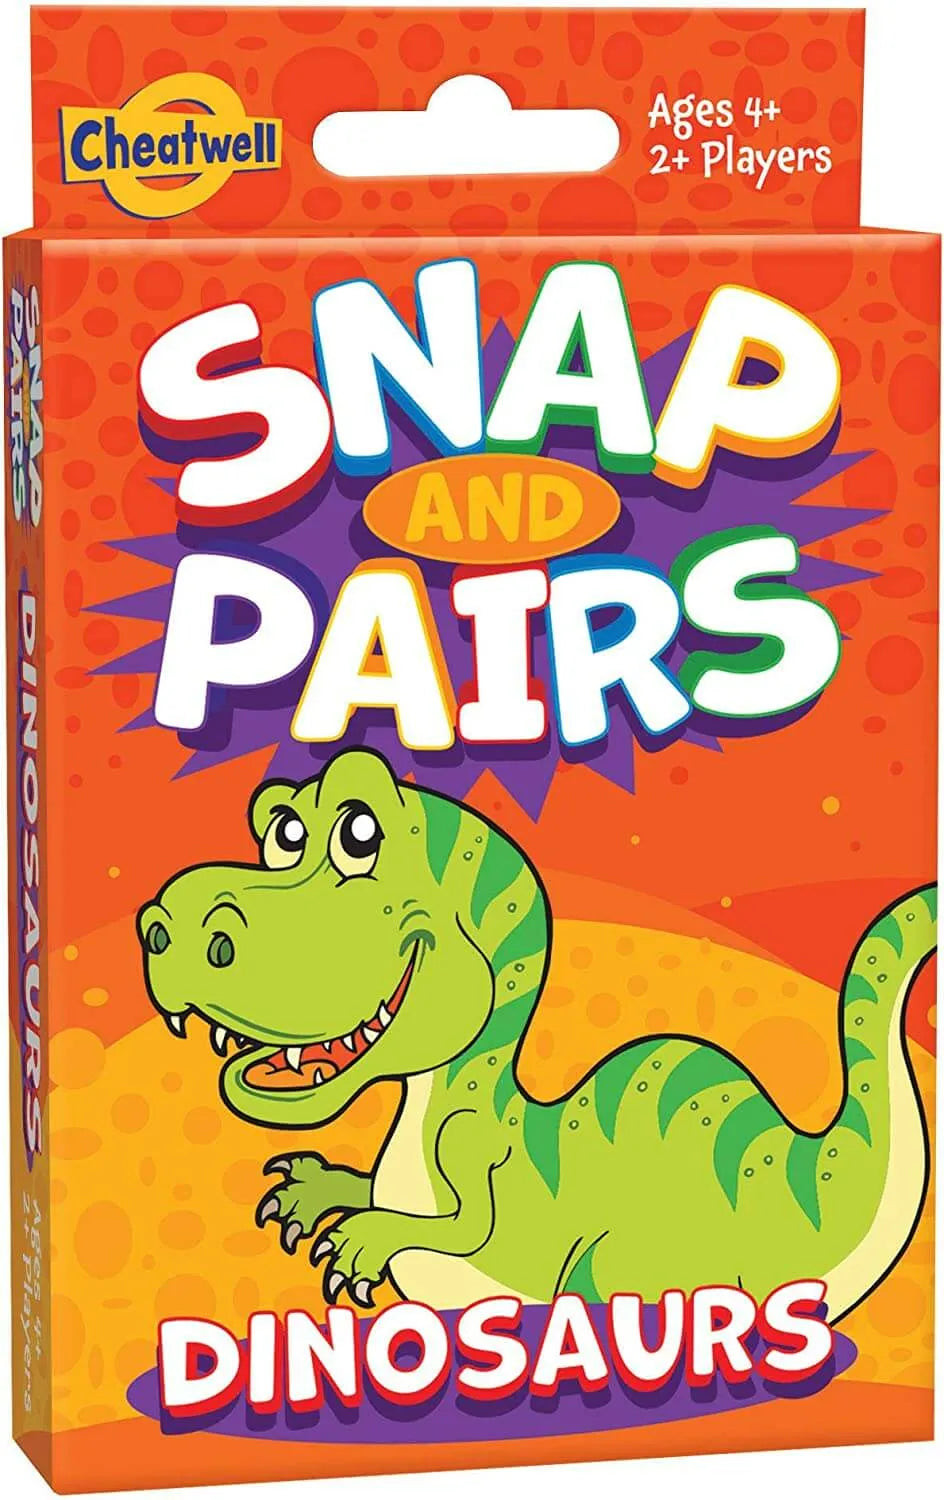 dinosaur games for children - shop cheatwell games - card games for children